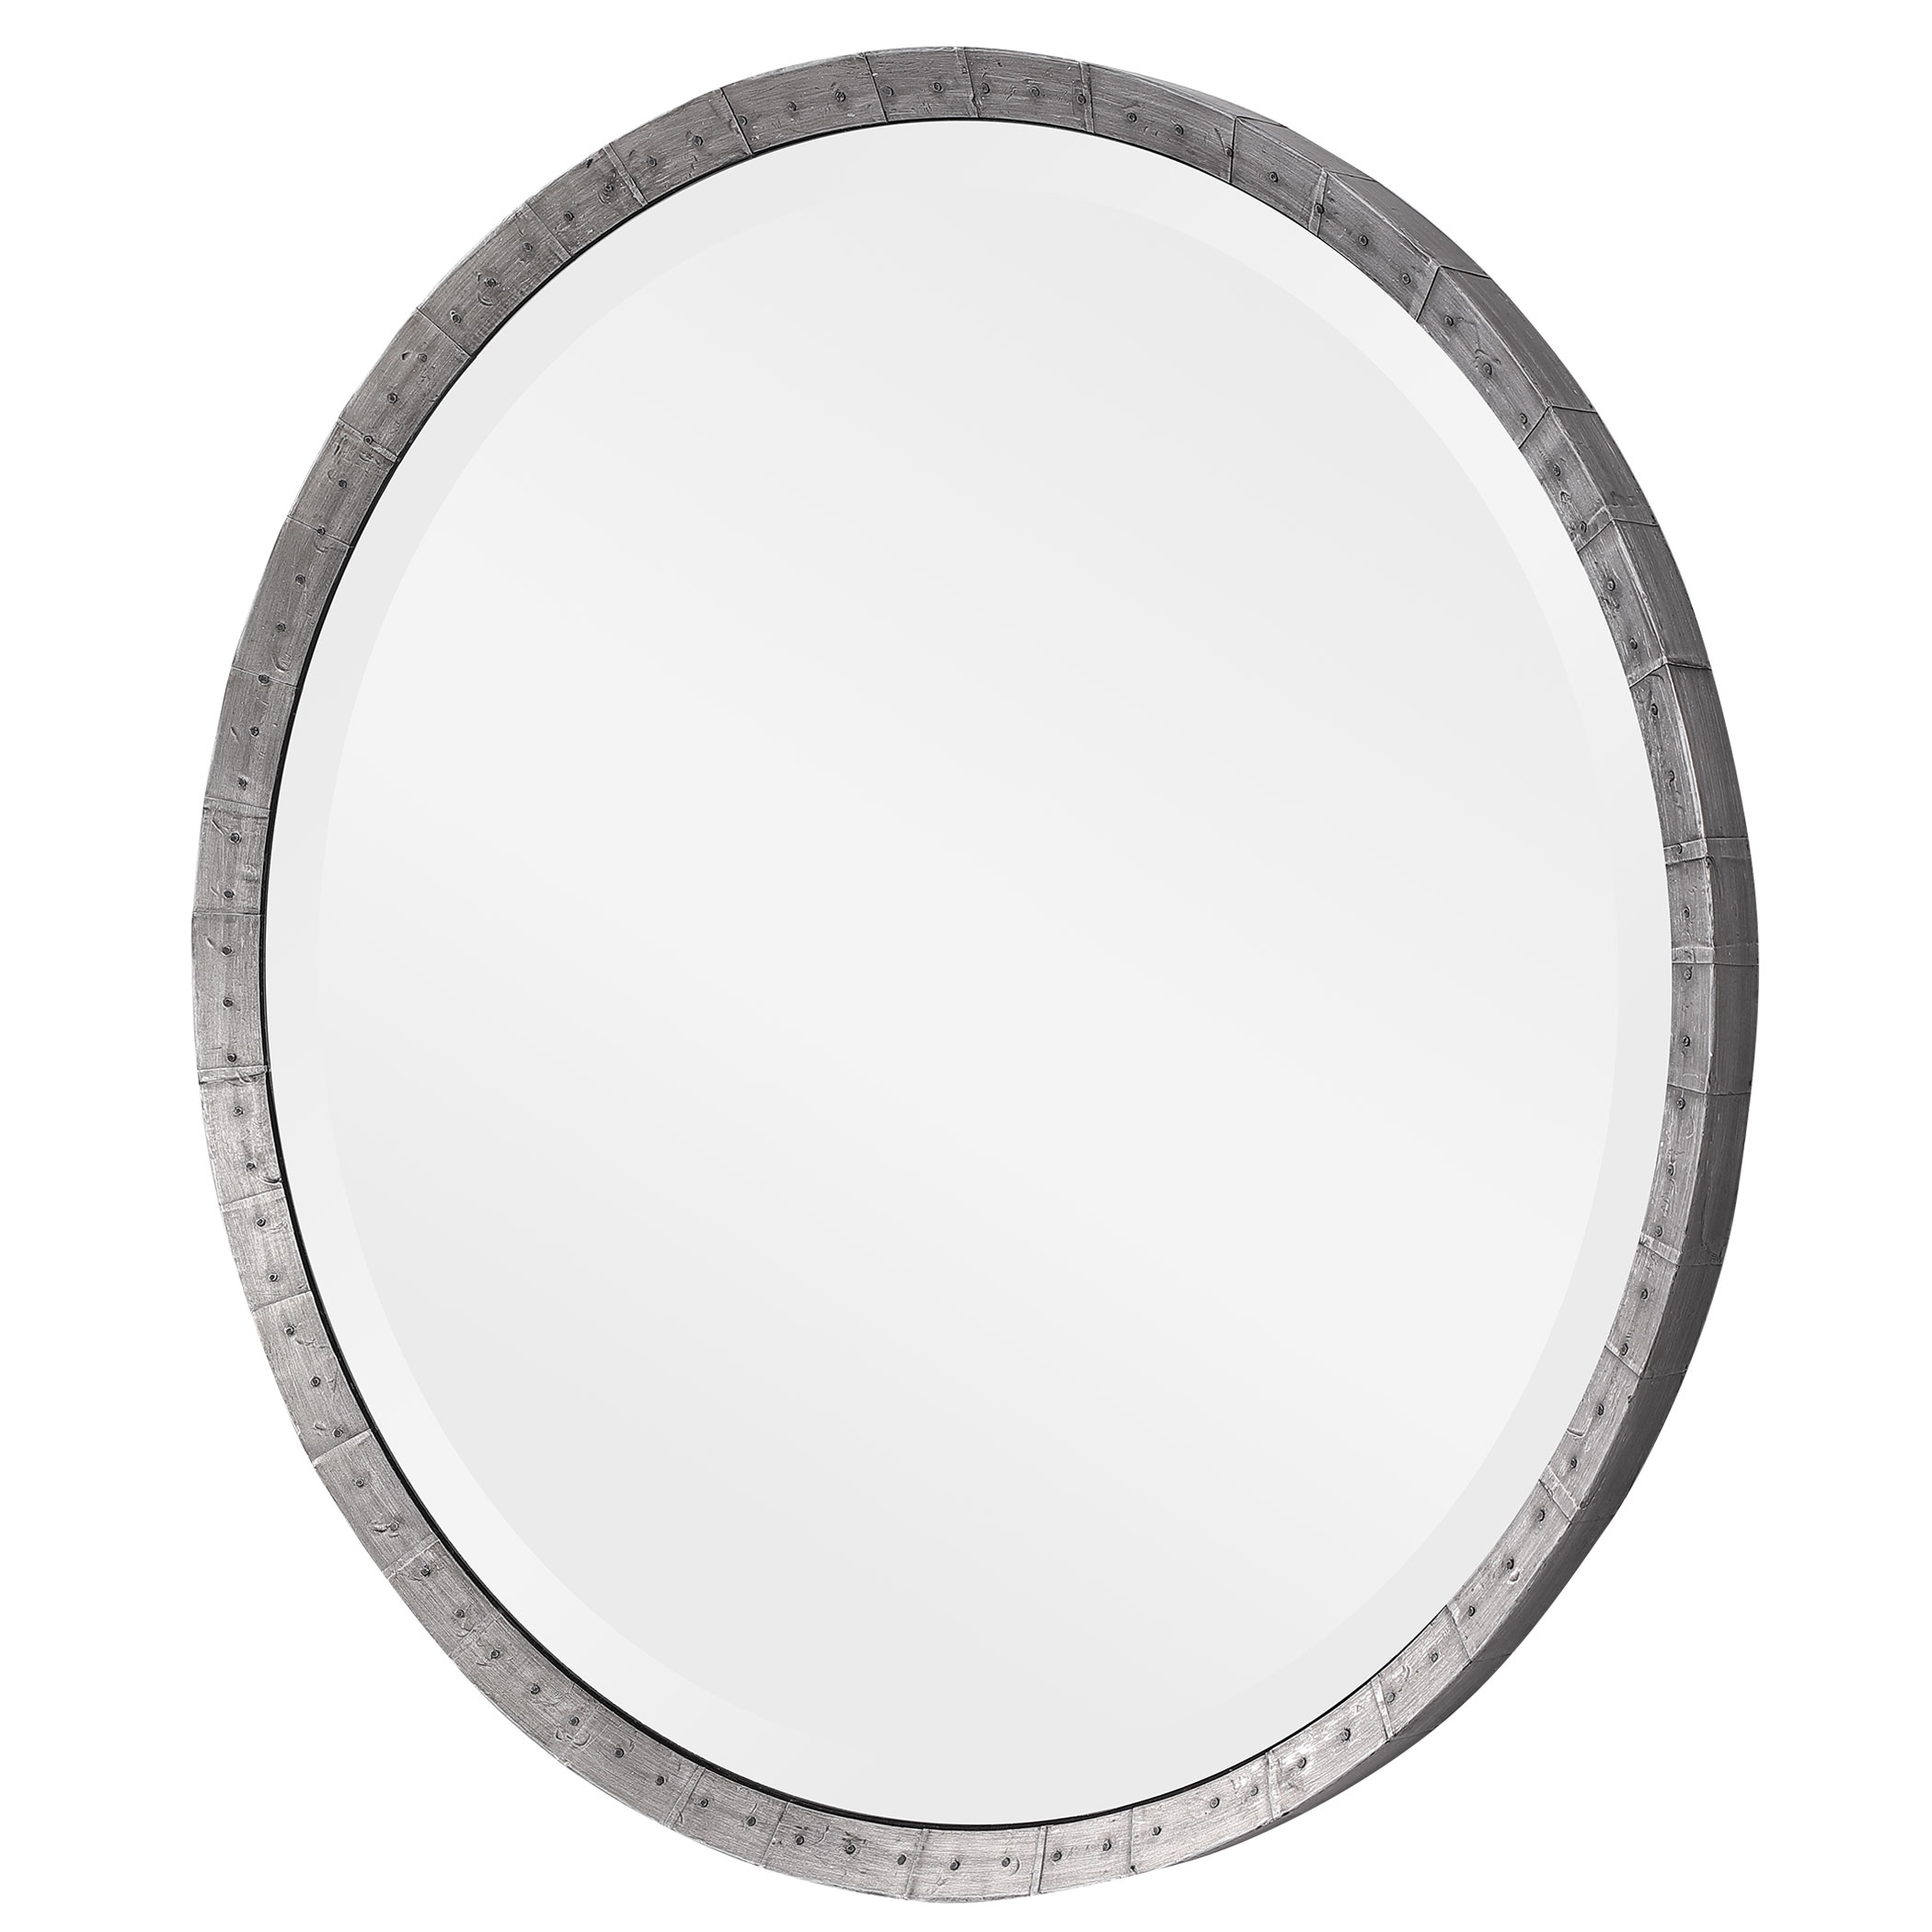 Bartow Industrial Round Mirror - Image 2